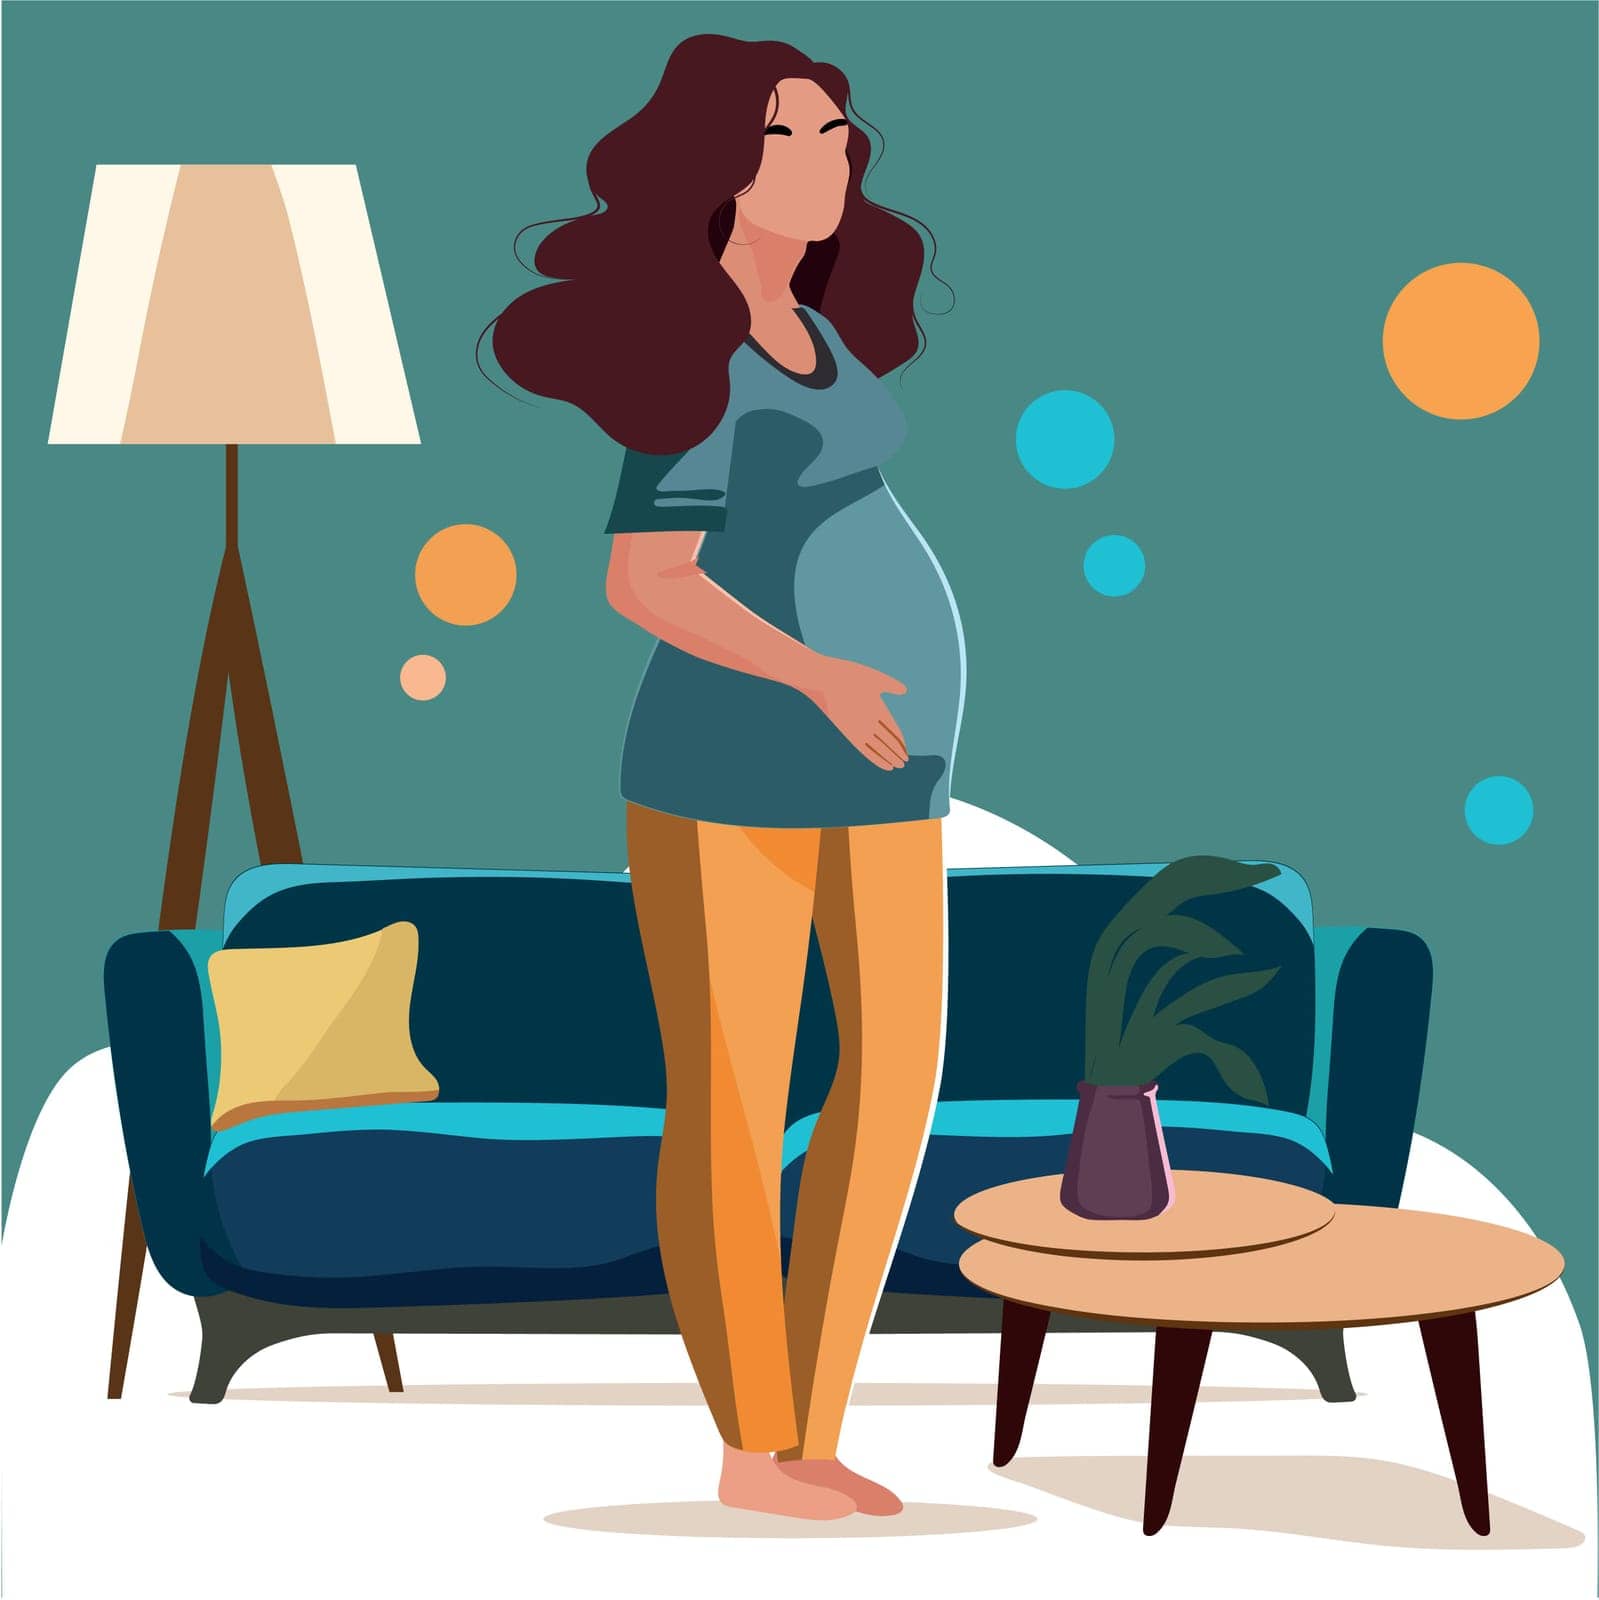 Pregnant woman, concept vector illustration in cute cartoon style, health, care, pregnancy. Vector illustration